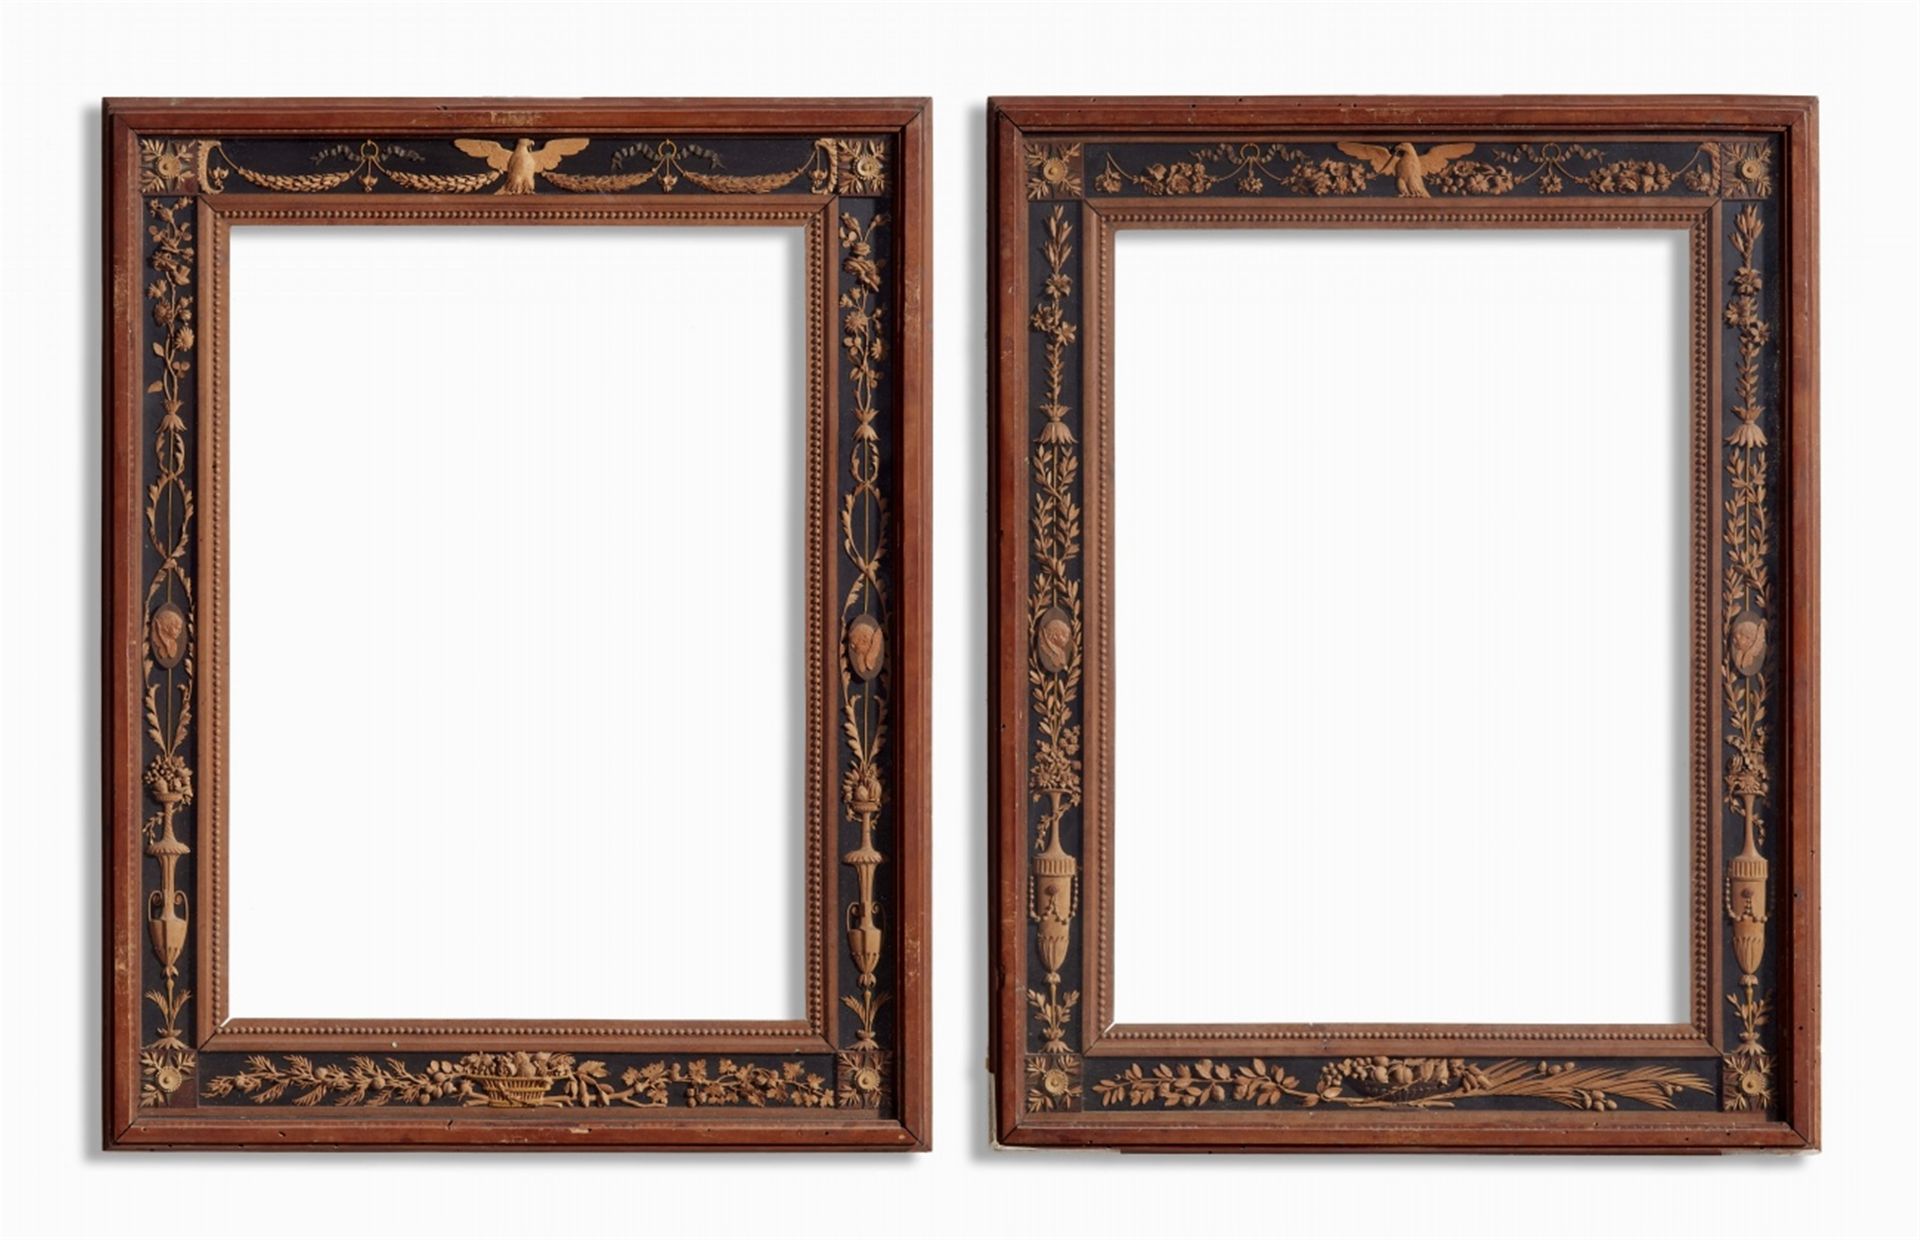 An important pair of carved limewood frames by Giuseppe Bonzanigo